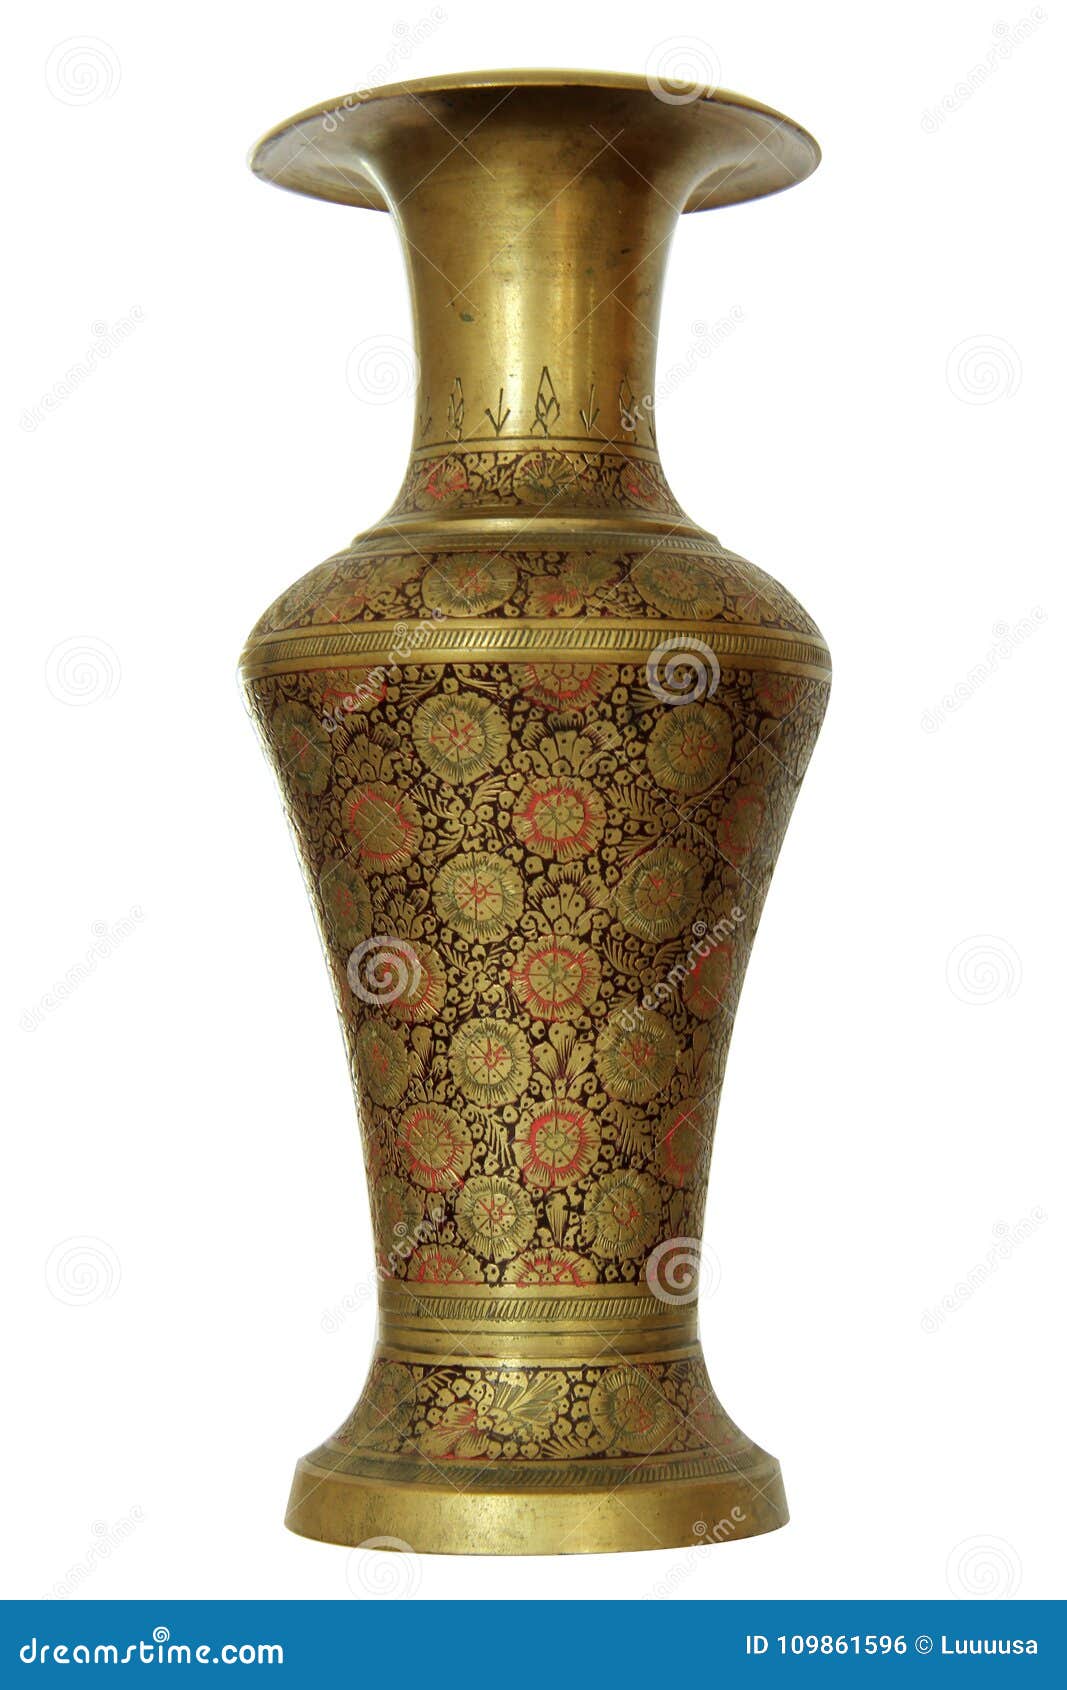 212 Indian Antique Brass Vase Stock Photos - Free & Royalty-Free